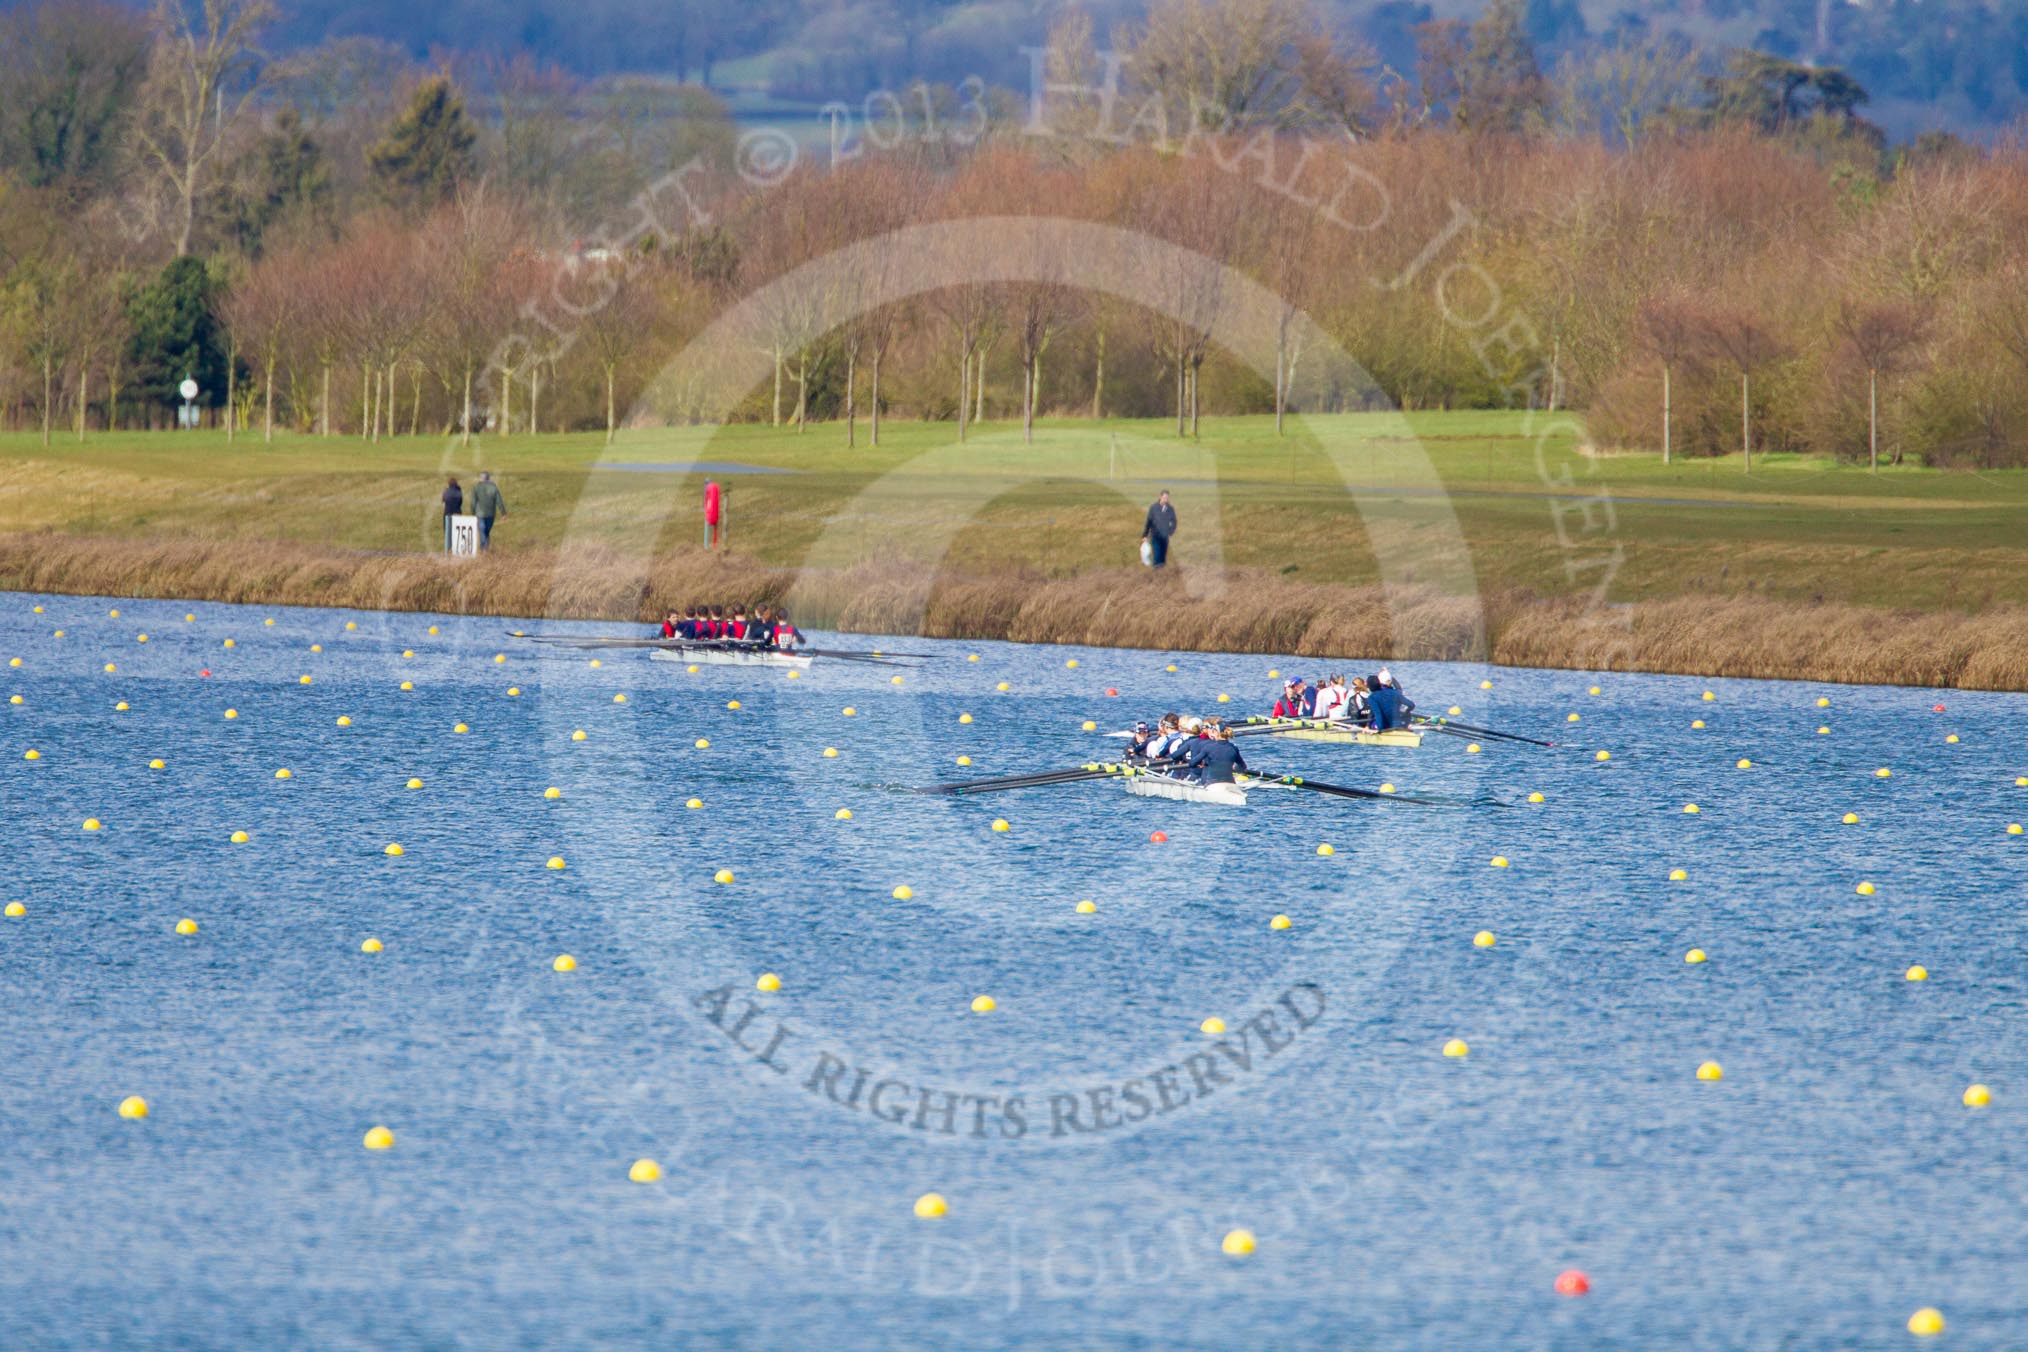 The Boat Race season 2013 - fixture OUWBC vs Olympians: The OUWBC Blue Boat and the Olympians at Dorney Lake..
Dorney Lake,
Dorney, Windsor,
Buckinghamshire,
United Kingdom,
on 16 March 2013 at 12:13, image #184